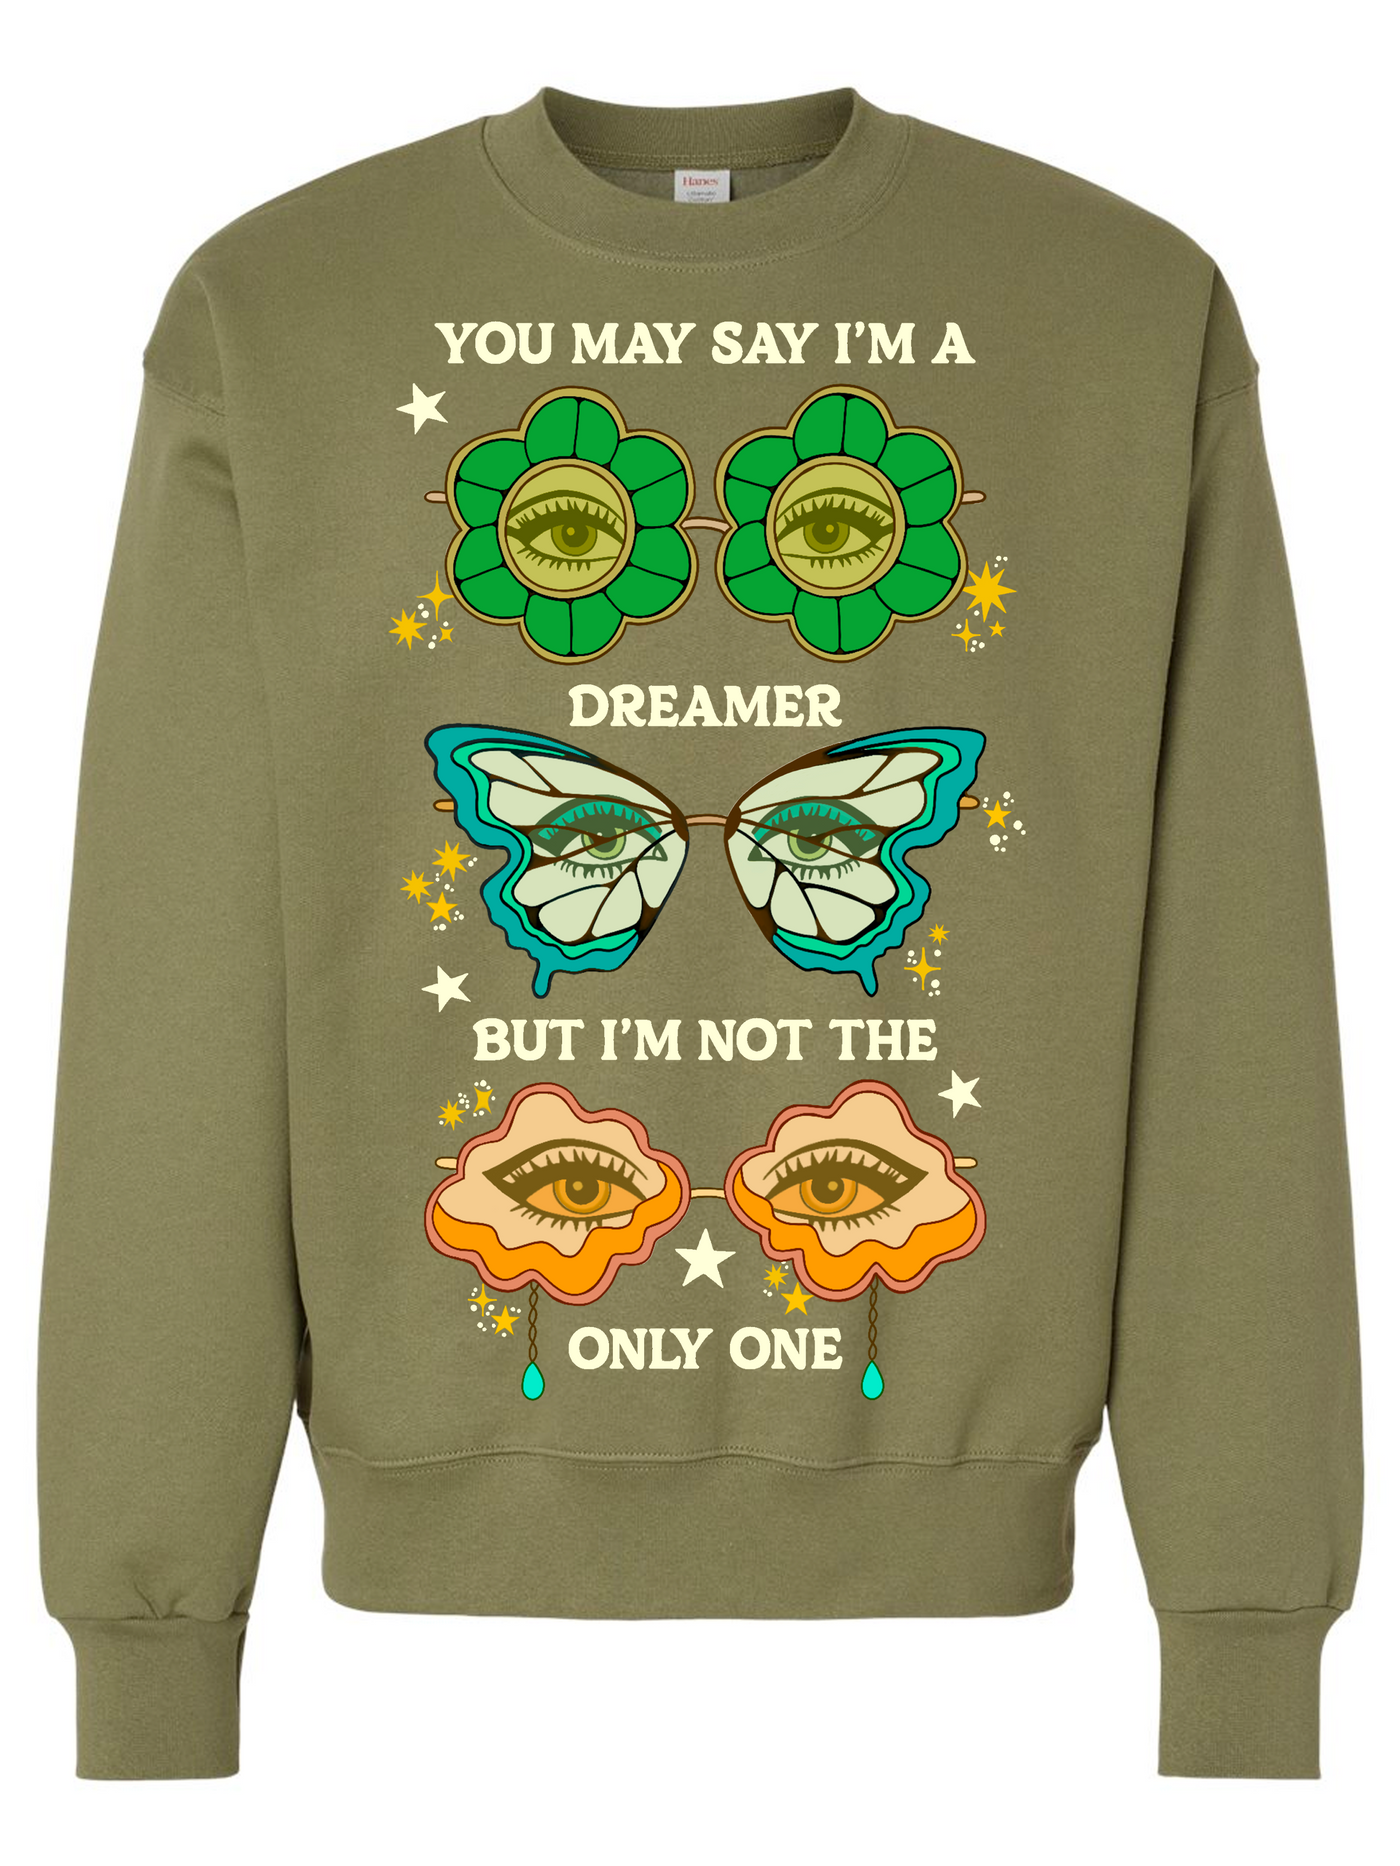 You Know I’m A Dreamer Sweatshirt